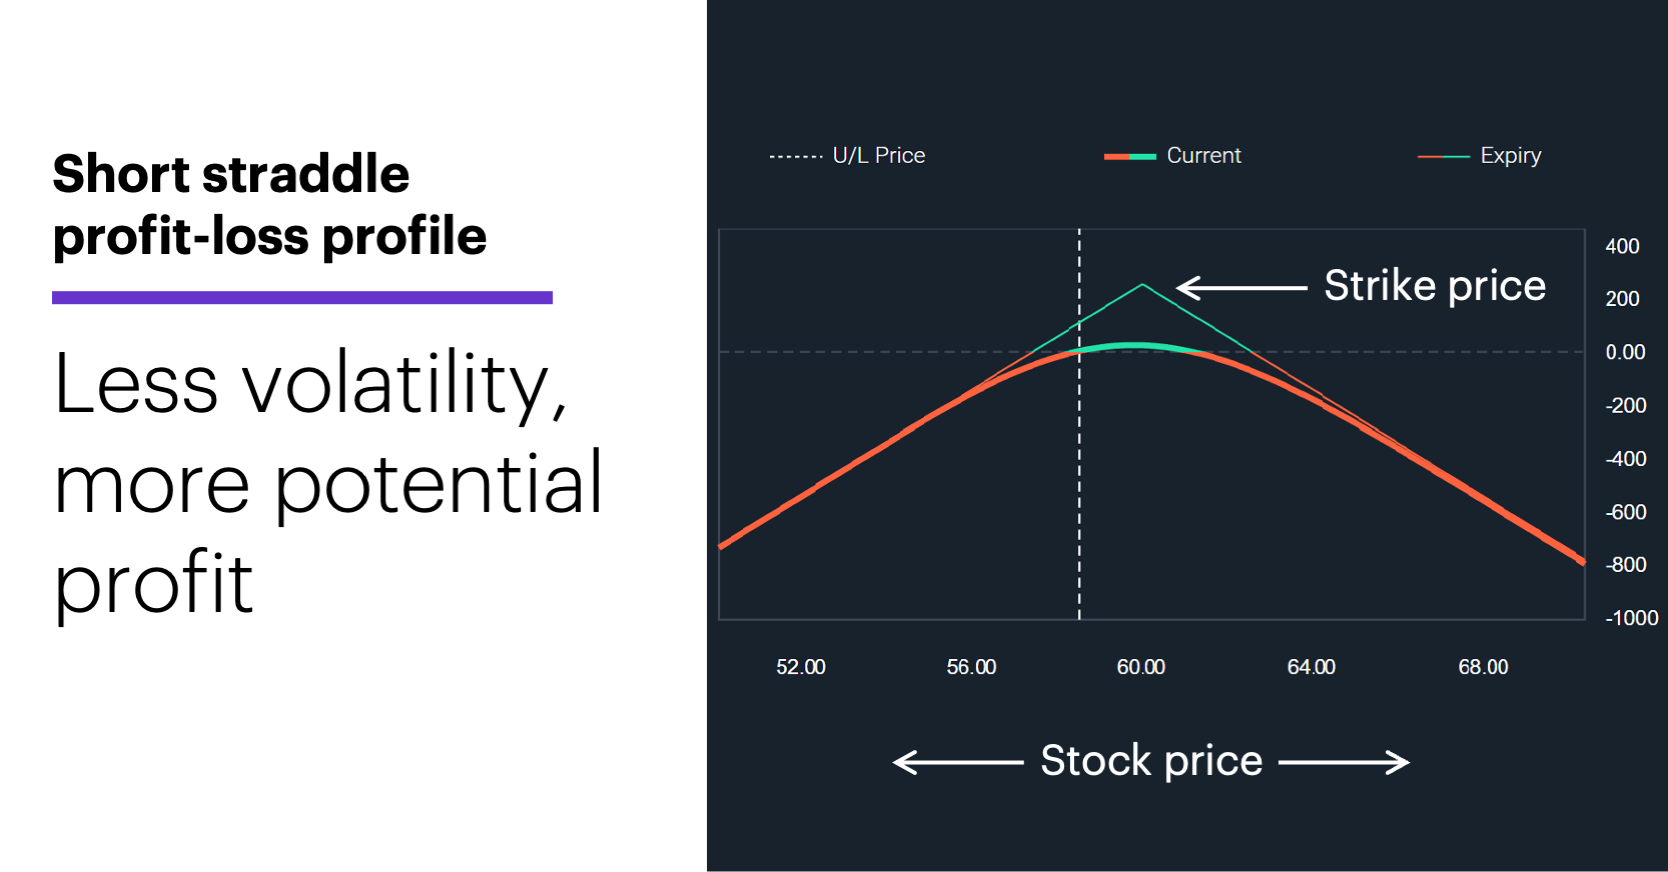 Chart 3: Short straddle profit-loss profile. Options straddle risk-reward profile. Less volatility, more potential profit.